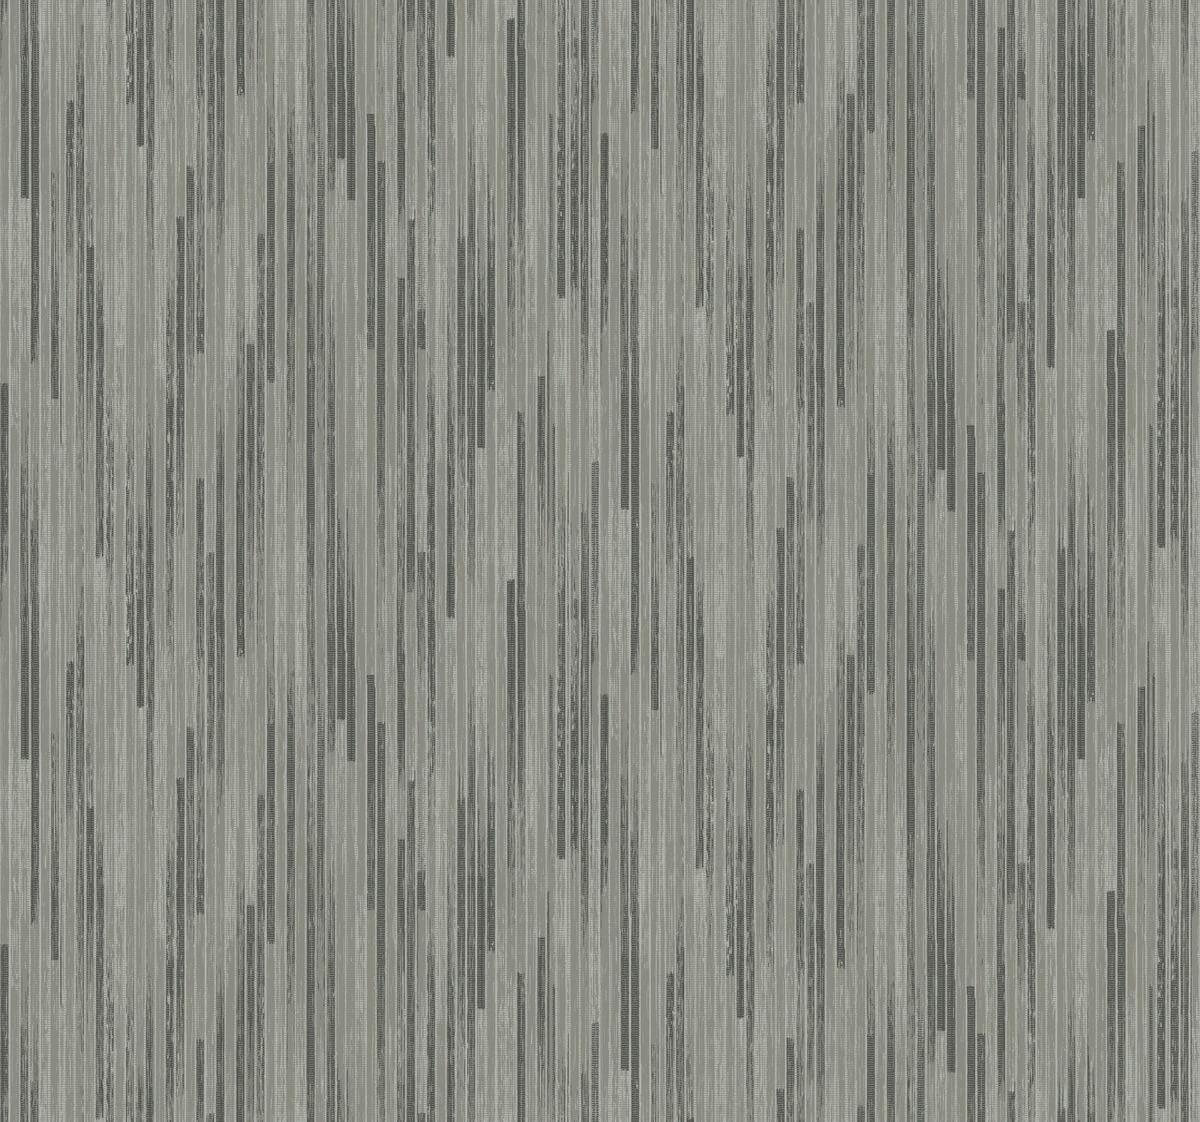 Candice Olson Modern Artisan II Bargello Wallpaper - Dark Gray